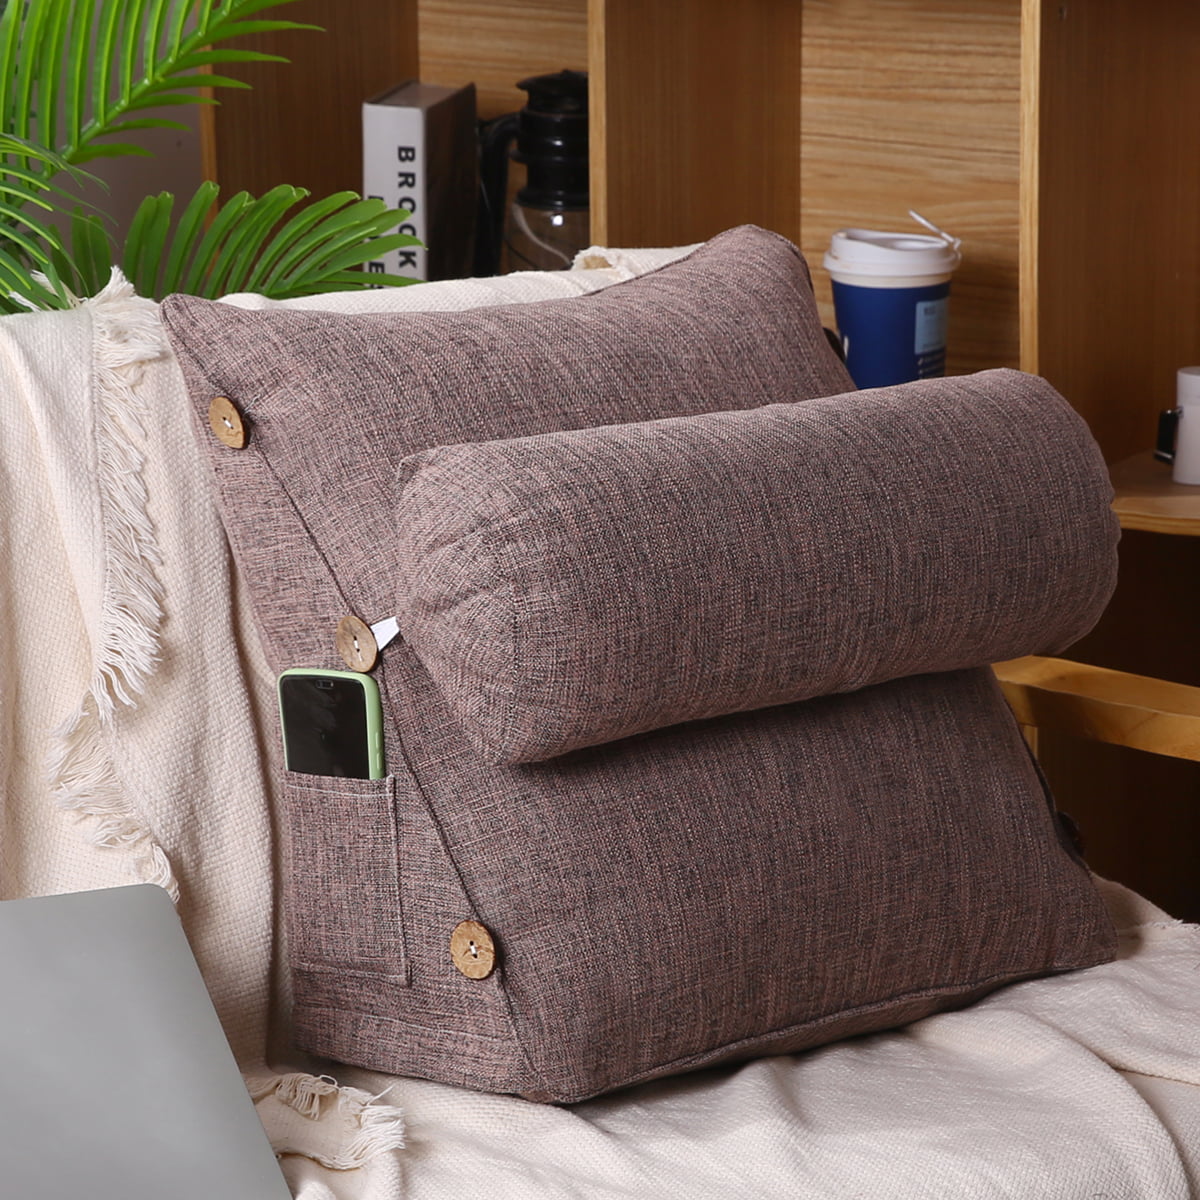 Triangular Wedge Back Pillow Rest Sleep Neck Home Sofa Bed Lumbar Office 